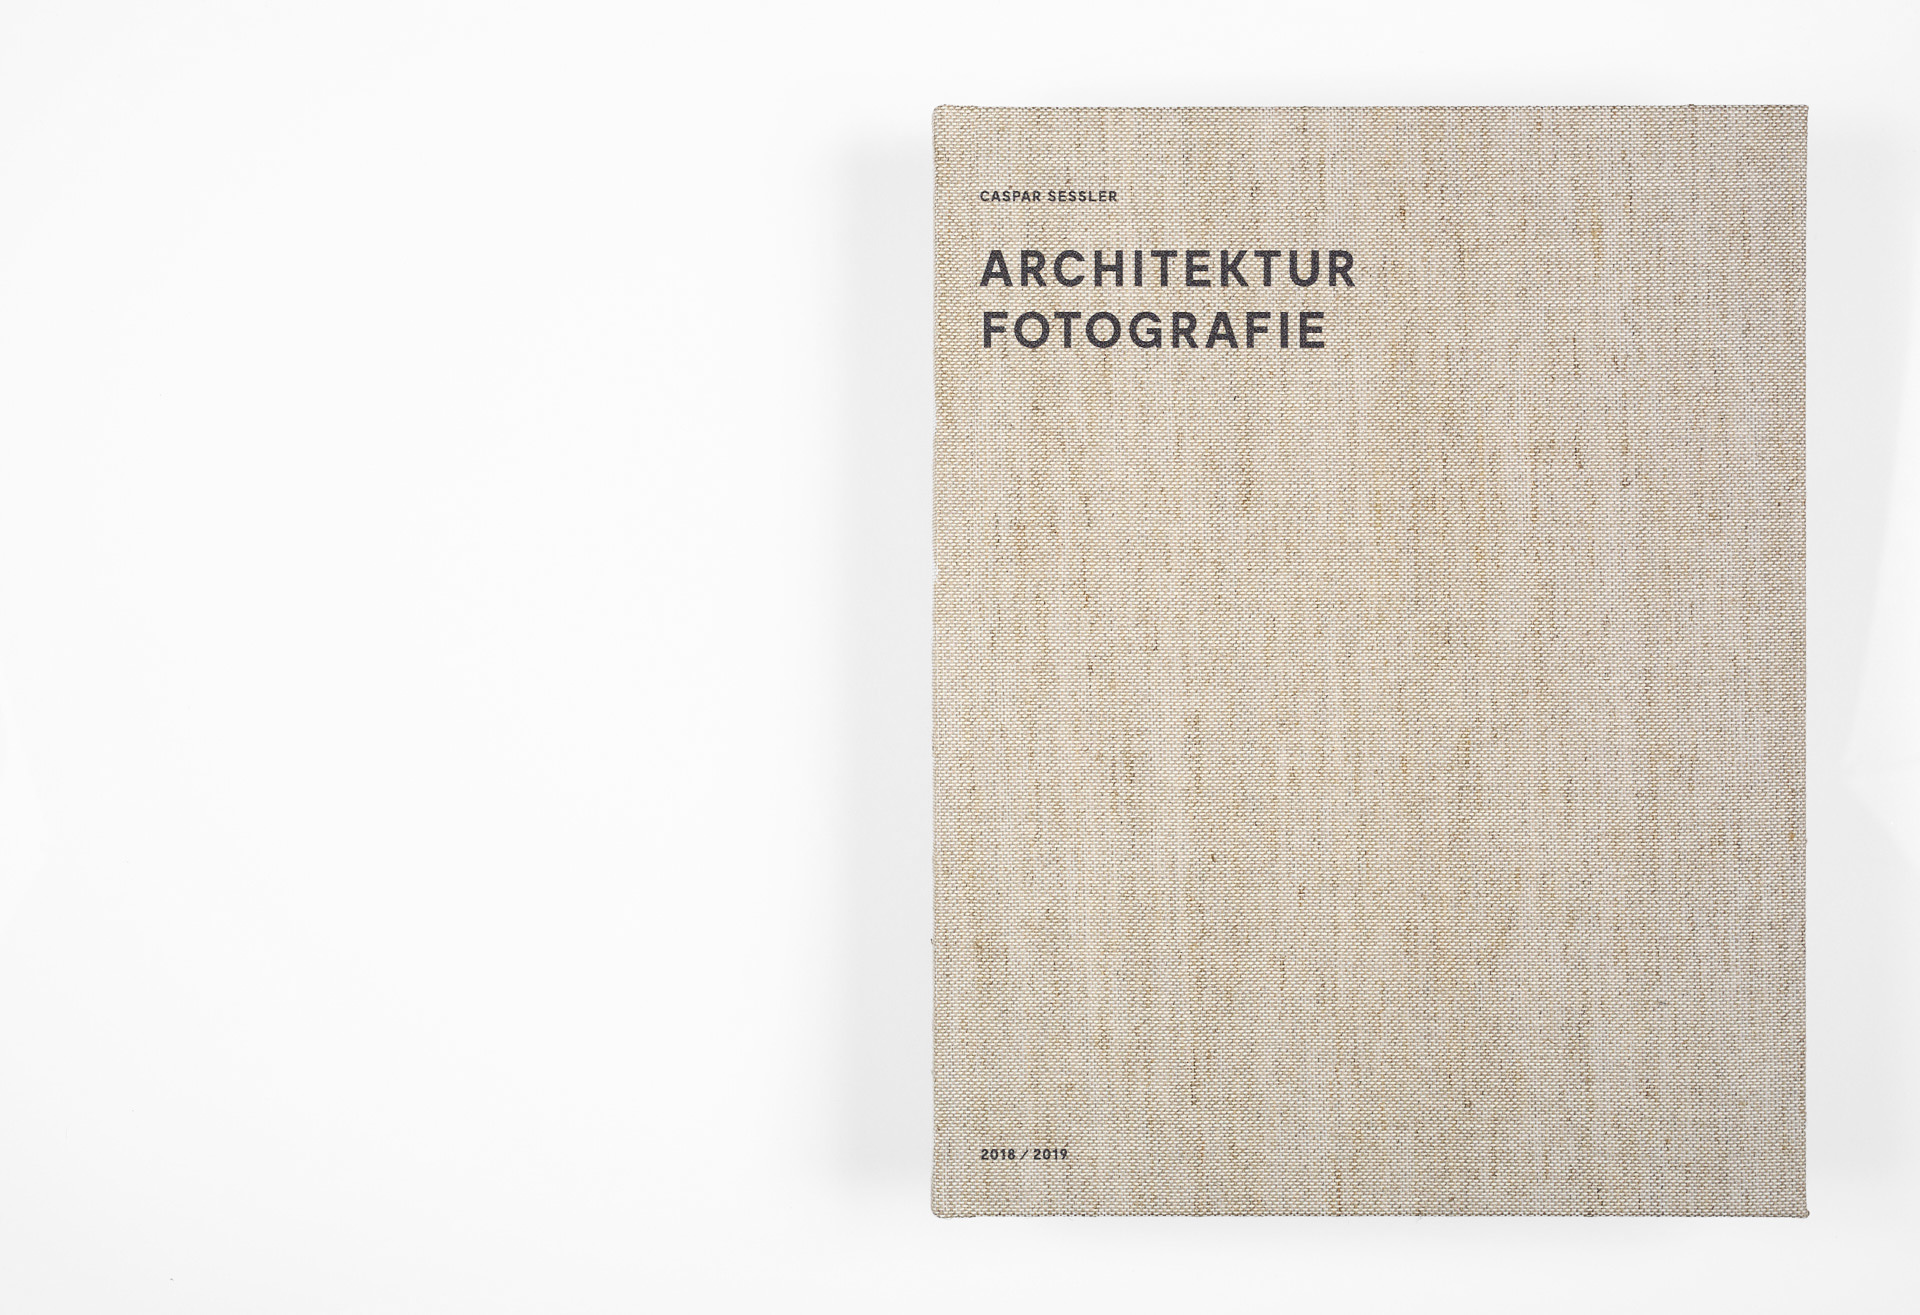  Reproduktionen Portfolio Architektur, Caspar Sessler, Bremen, 2019-03-26 